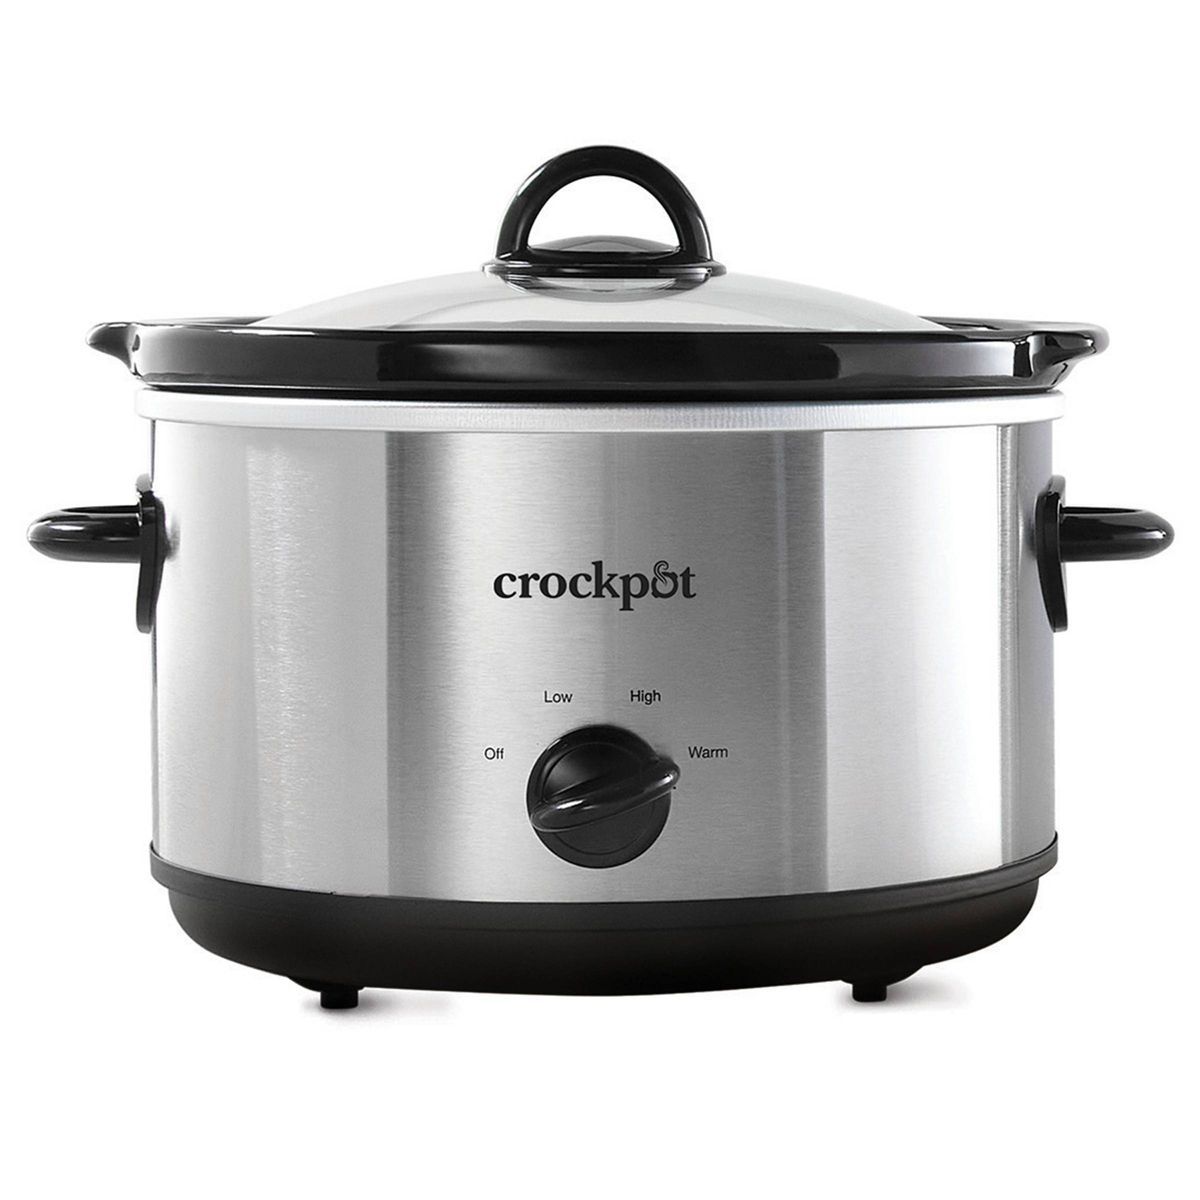 Crock-Pot 4.5qt Manual Slow Cooker - Stainless Steel | Target